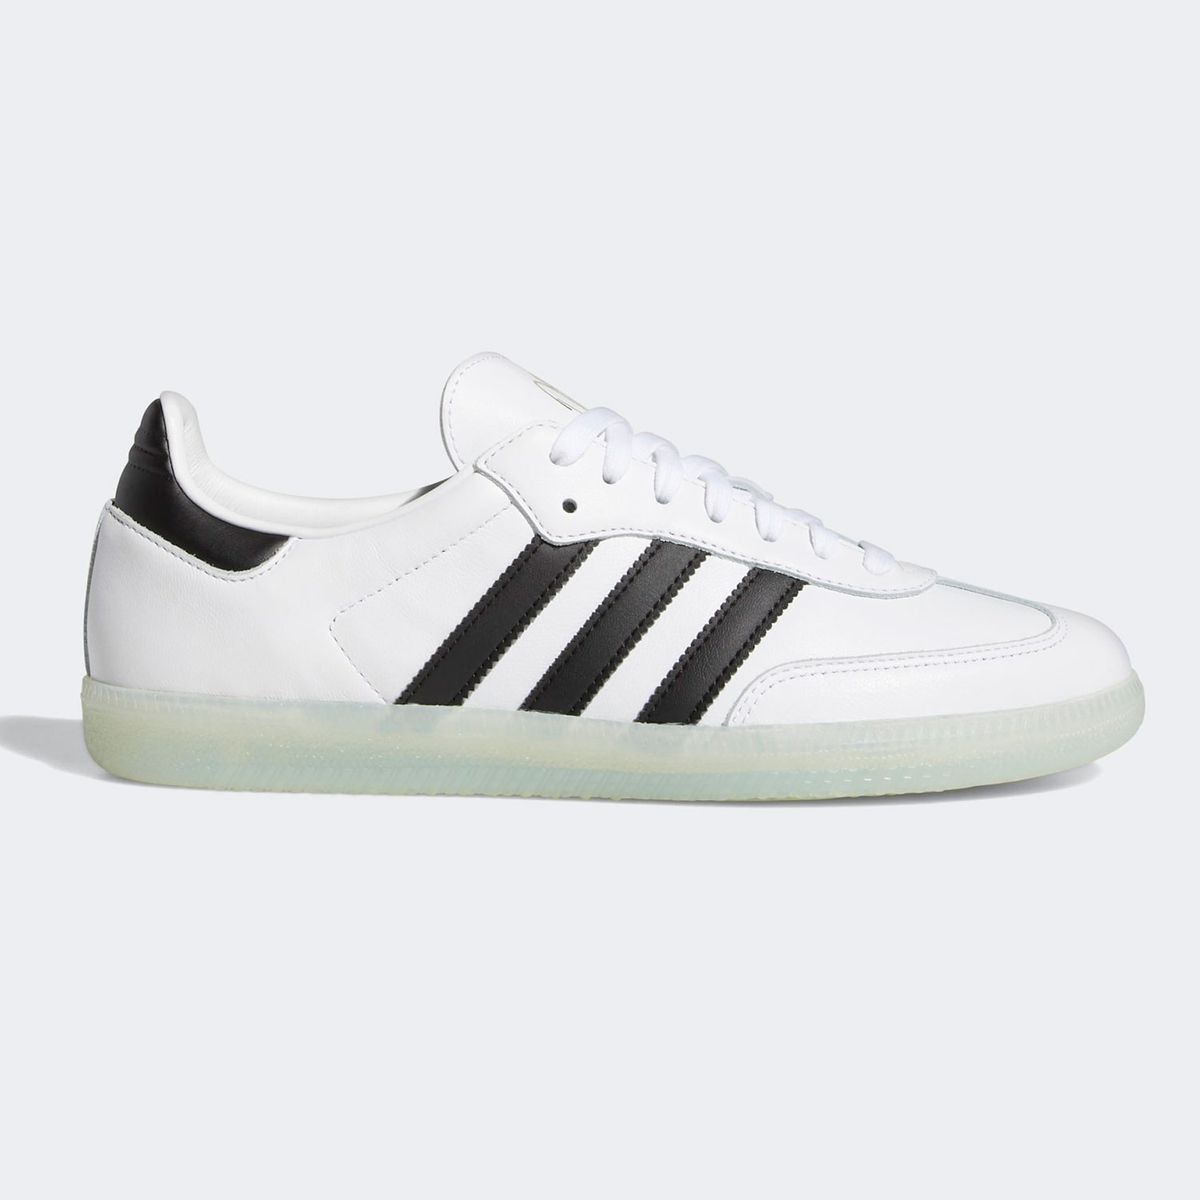 Adidas Samba sneakers